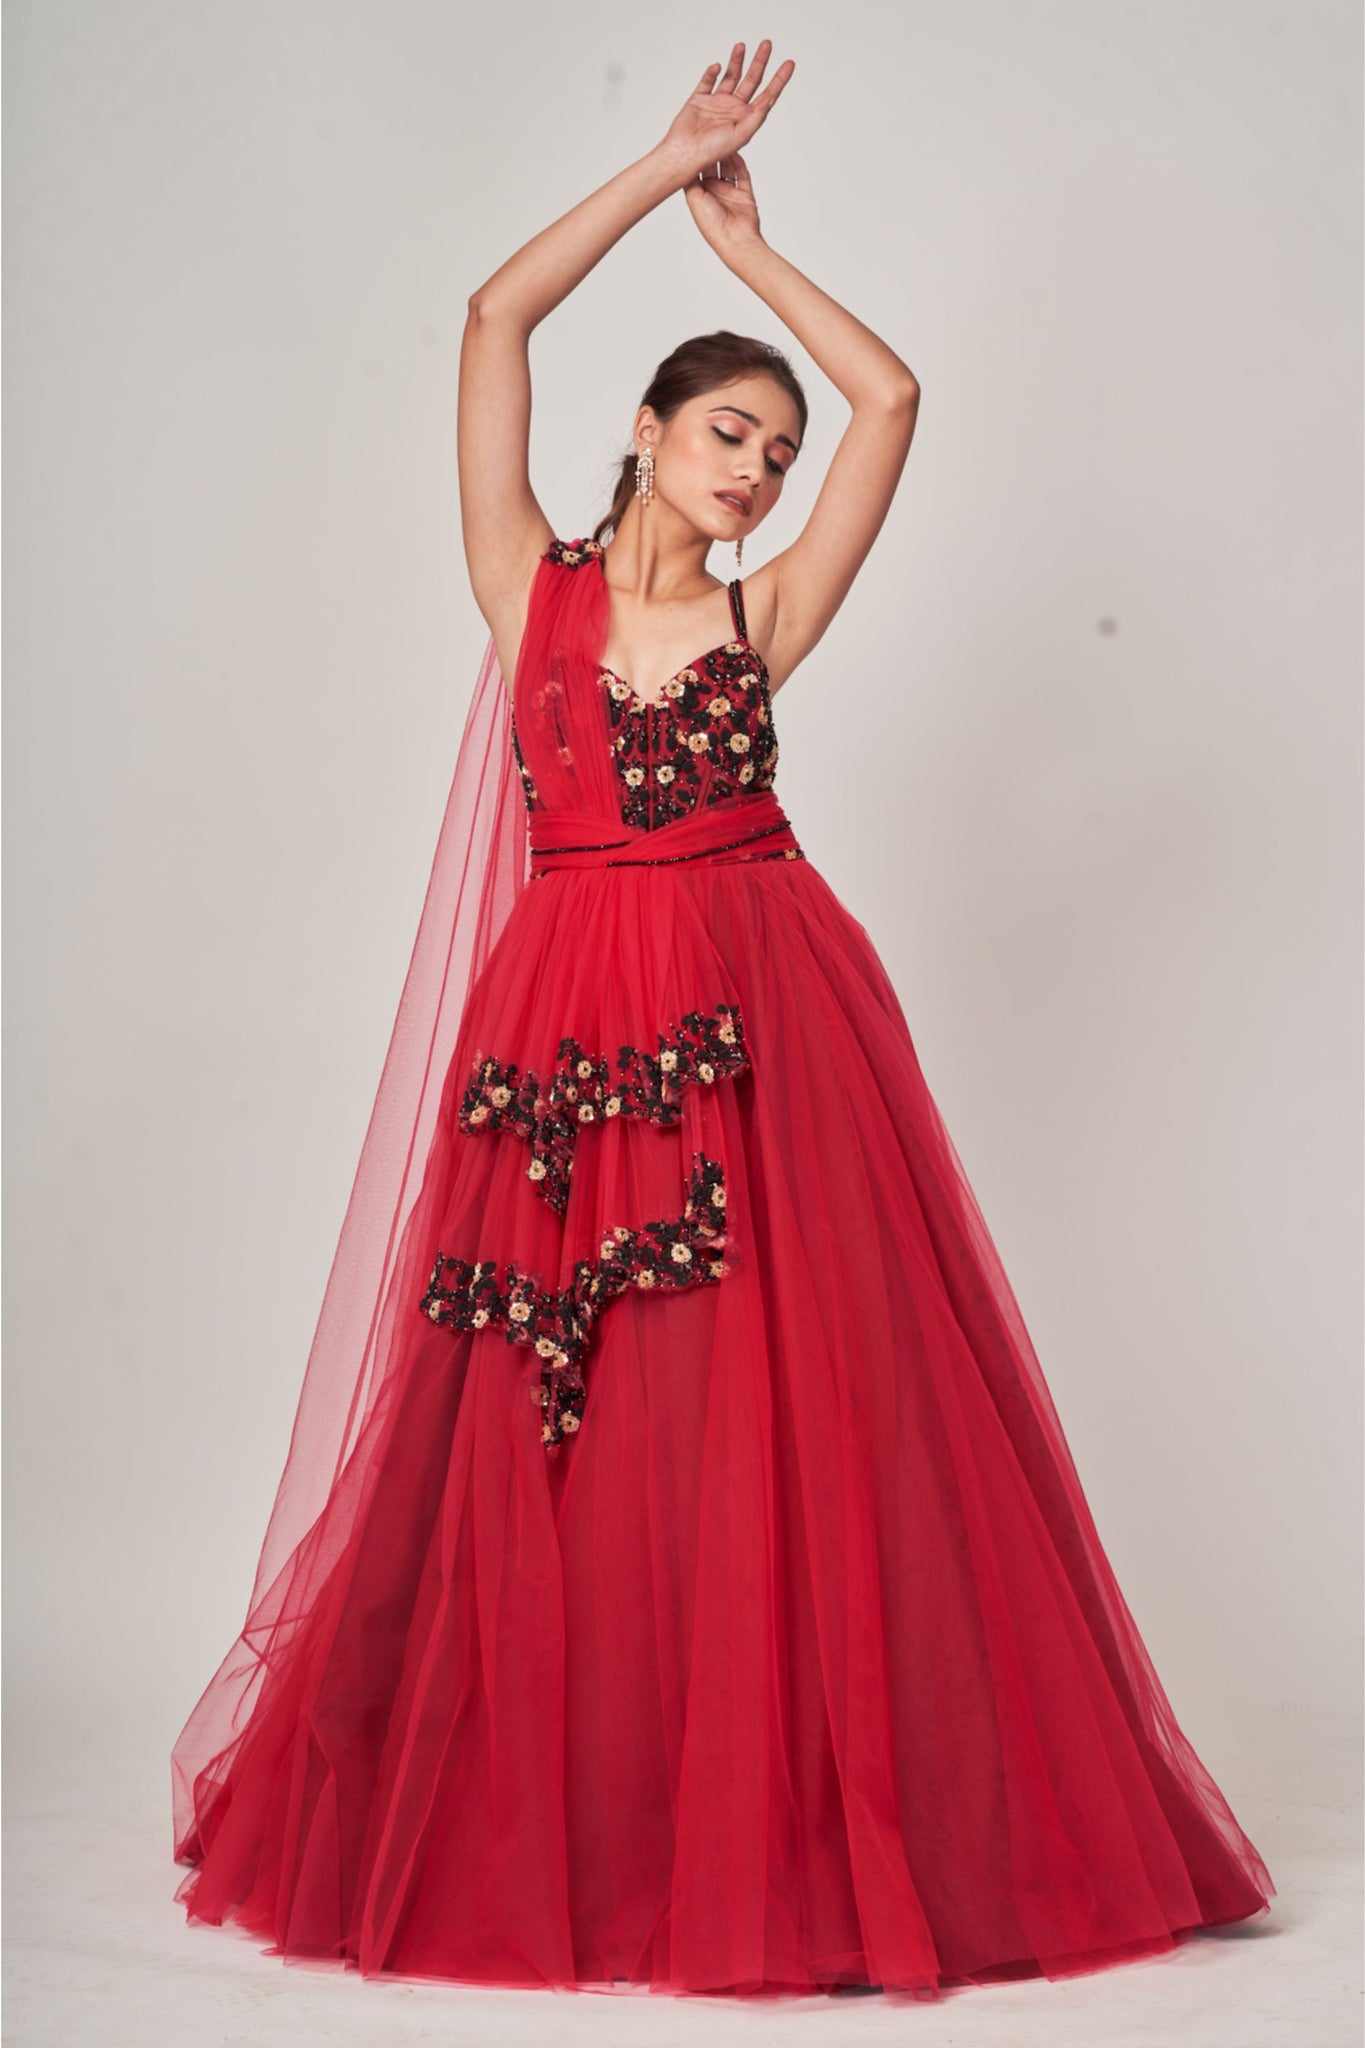 इंदौर fancy partywear evening gown सिर्फ 750 single || wedding dress ||  rajmohan creation indore | - YouTube